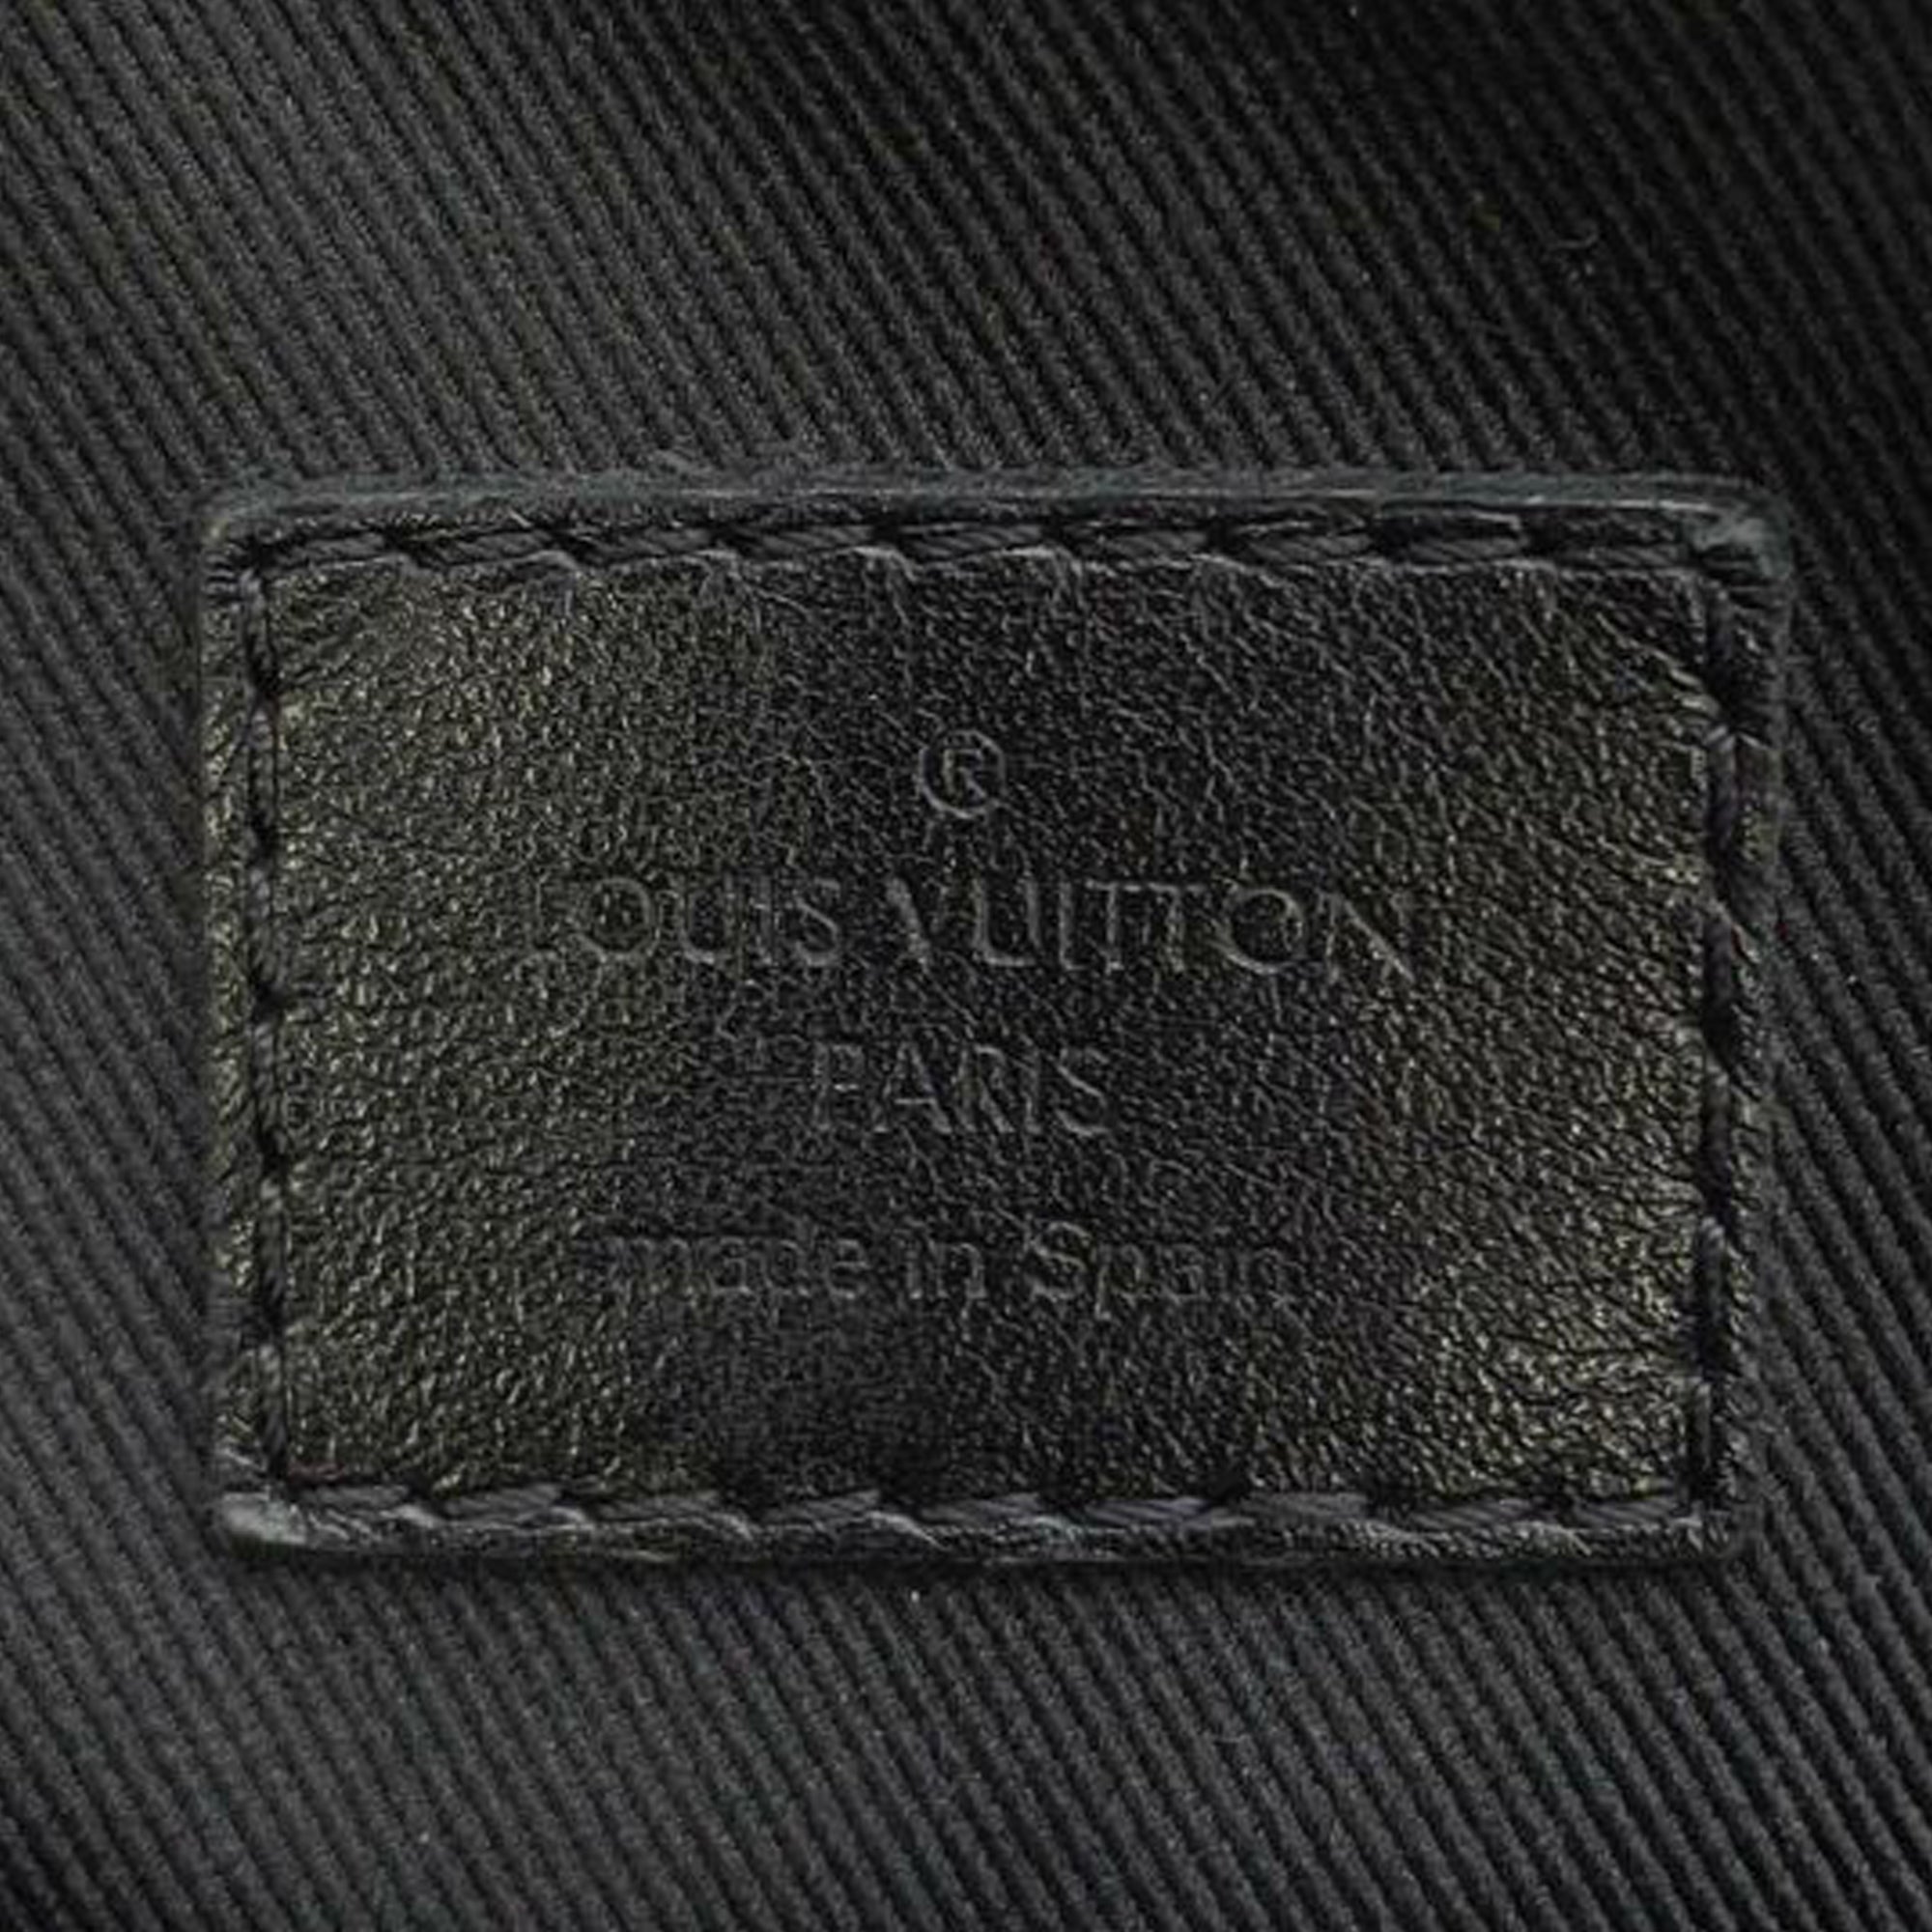 Louis Vuitton Black/Grey Monogram Galaxy Alpha Messenger Louis